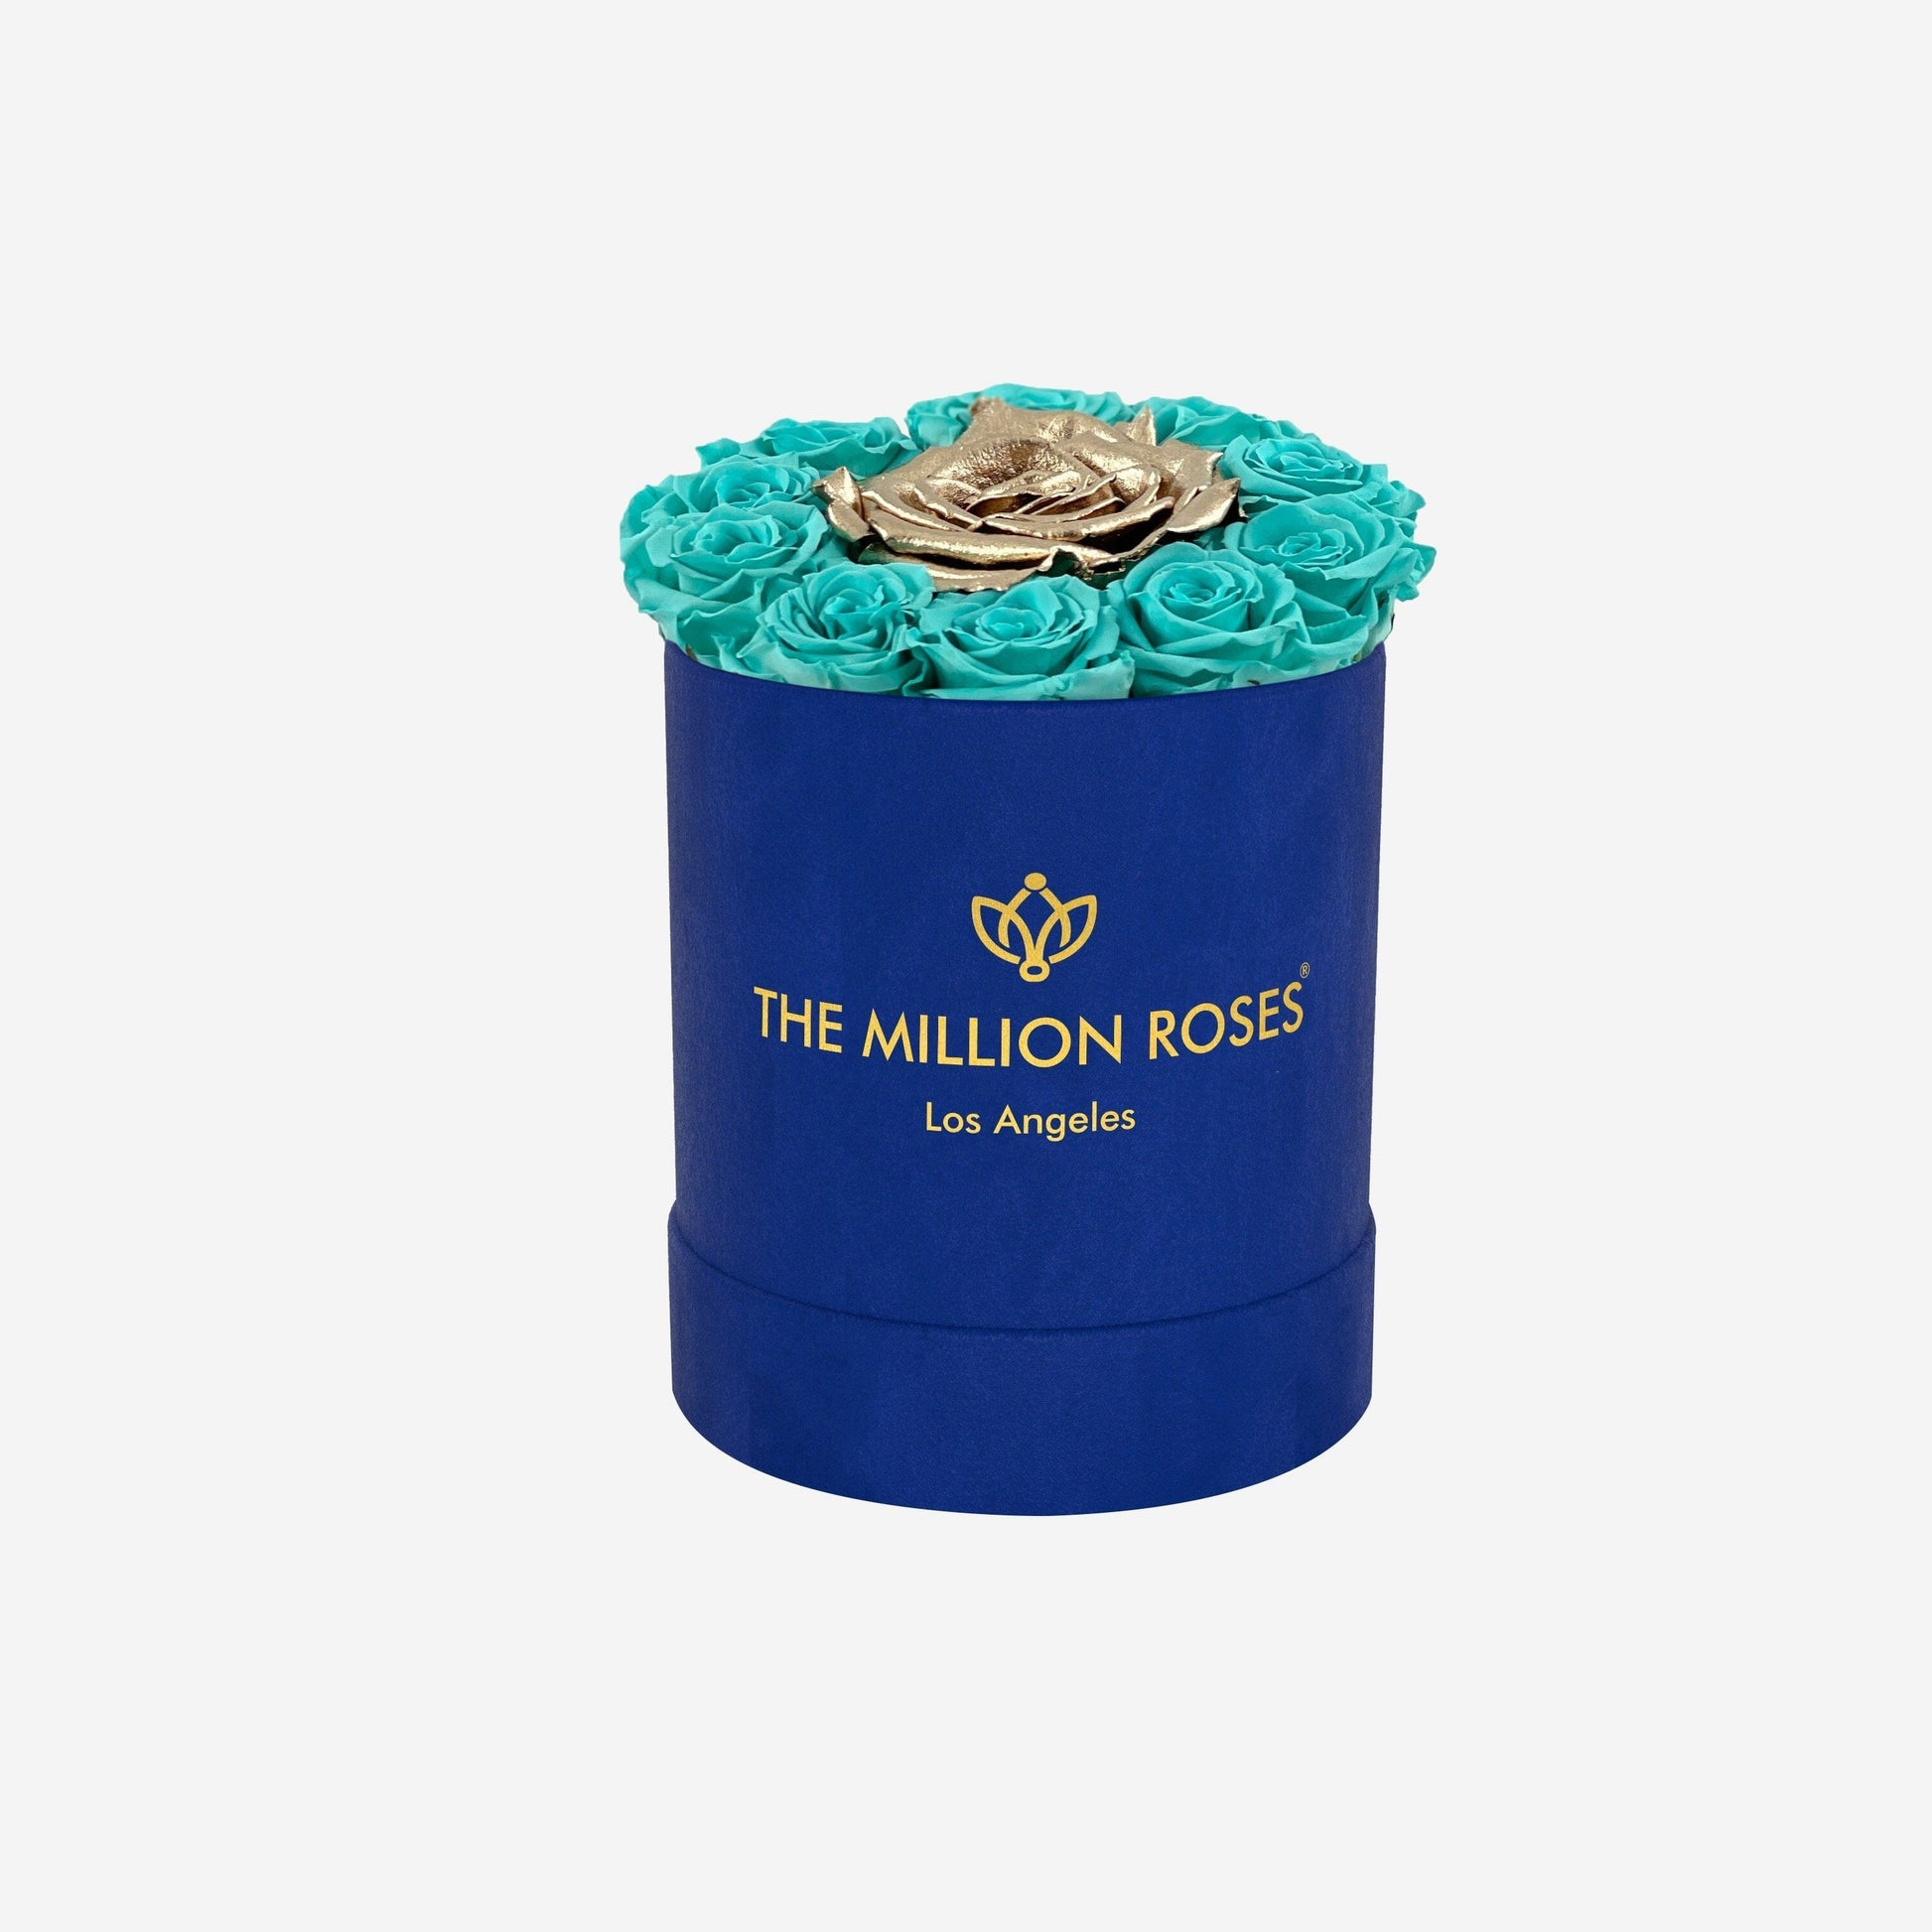 Basic Royal Blue Suede Box | Turquoise & Gold Mini Roses - The Million Roses